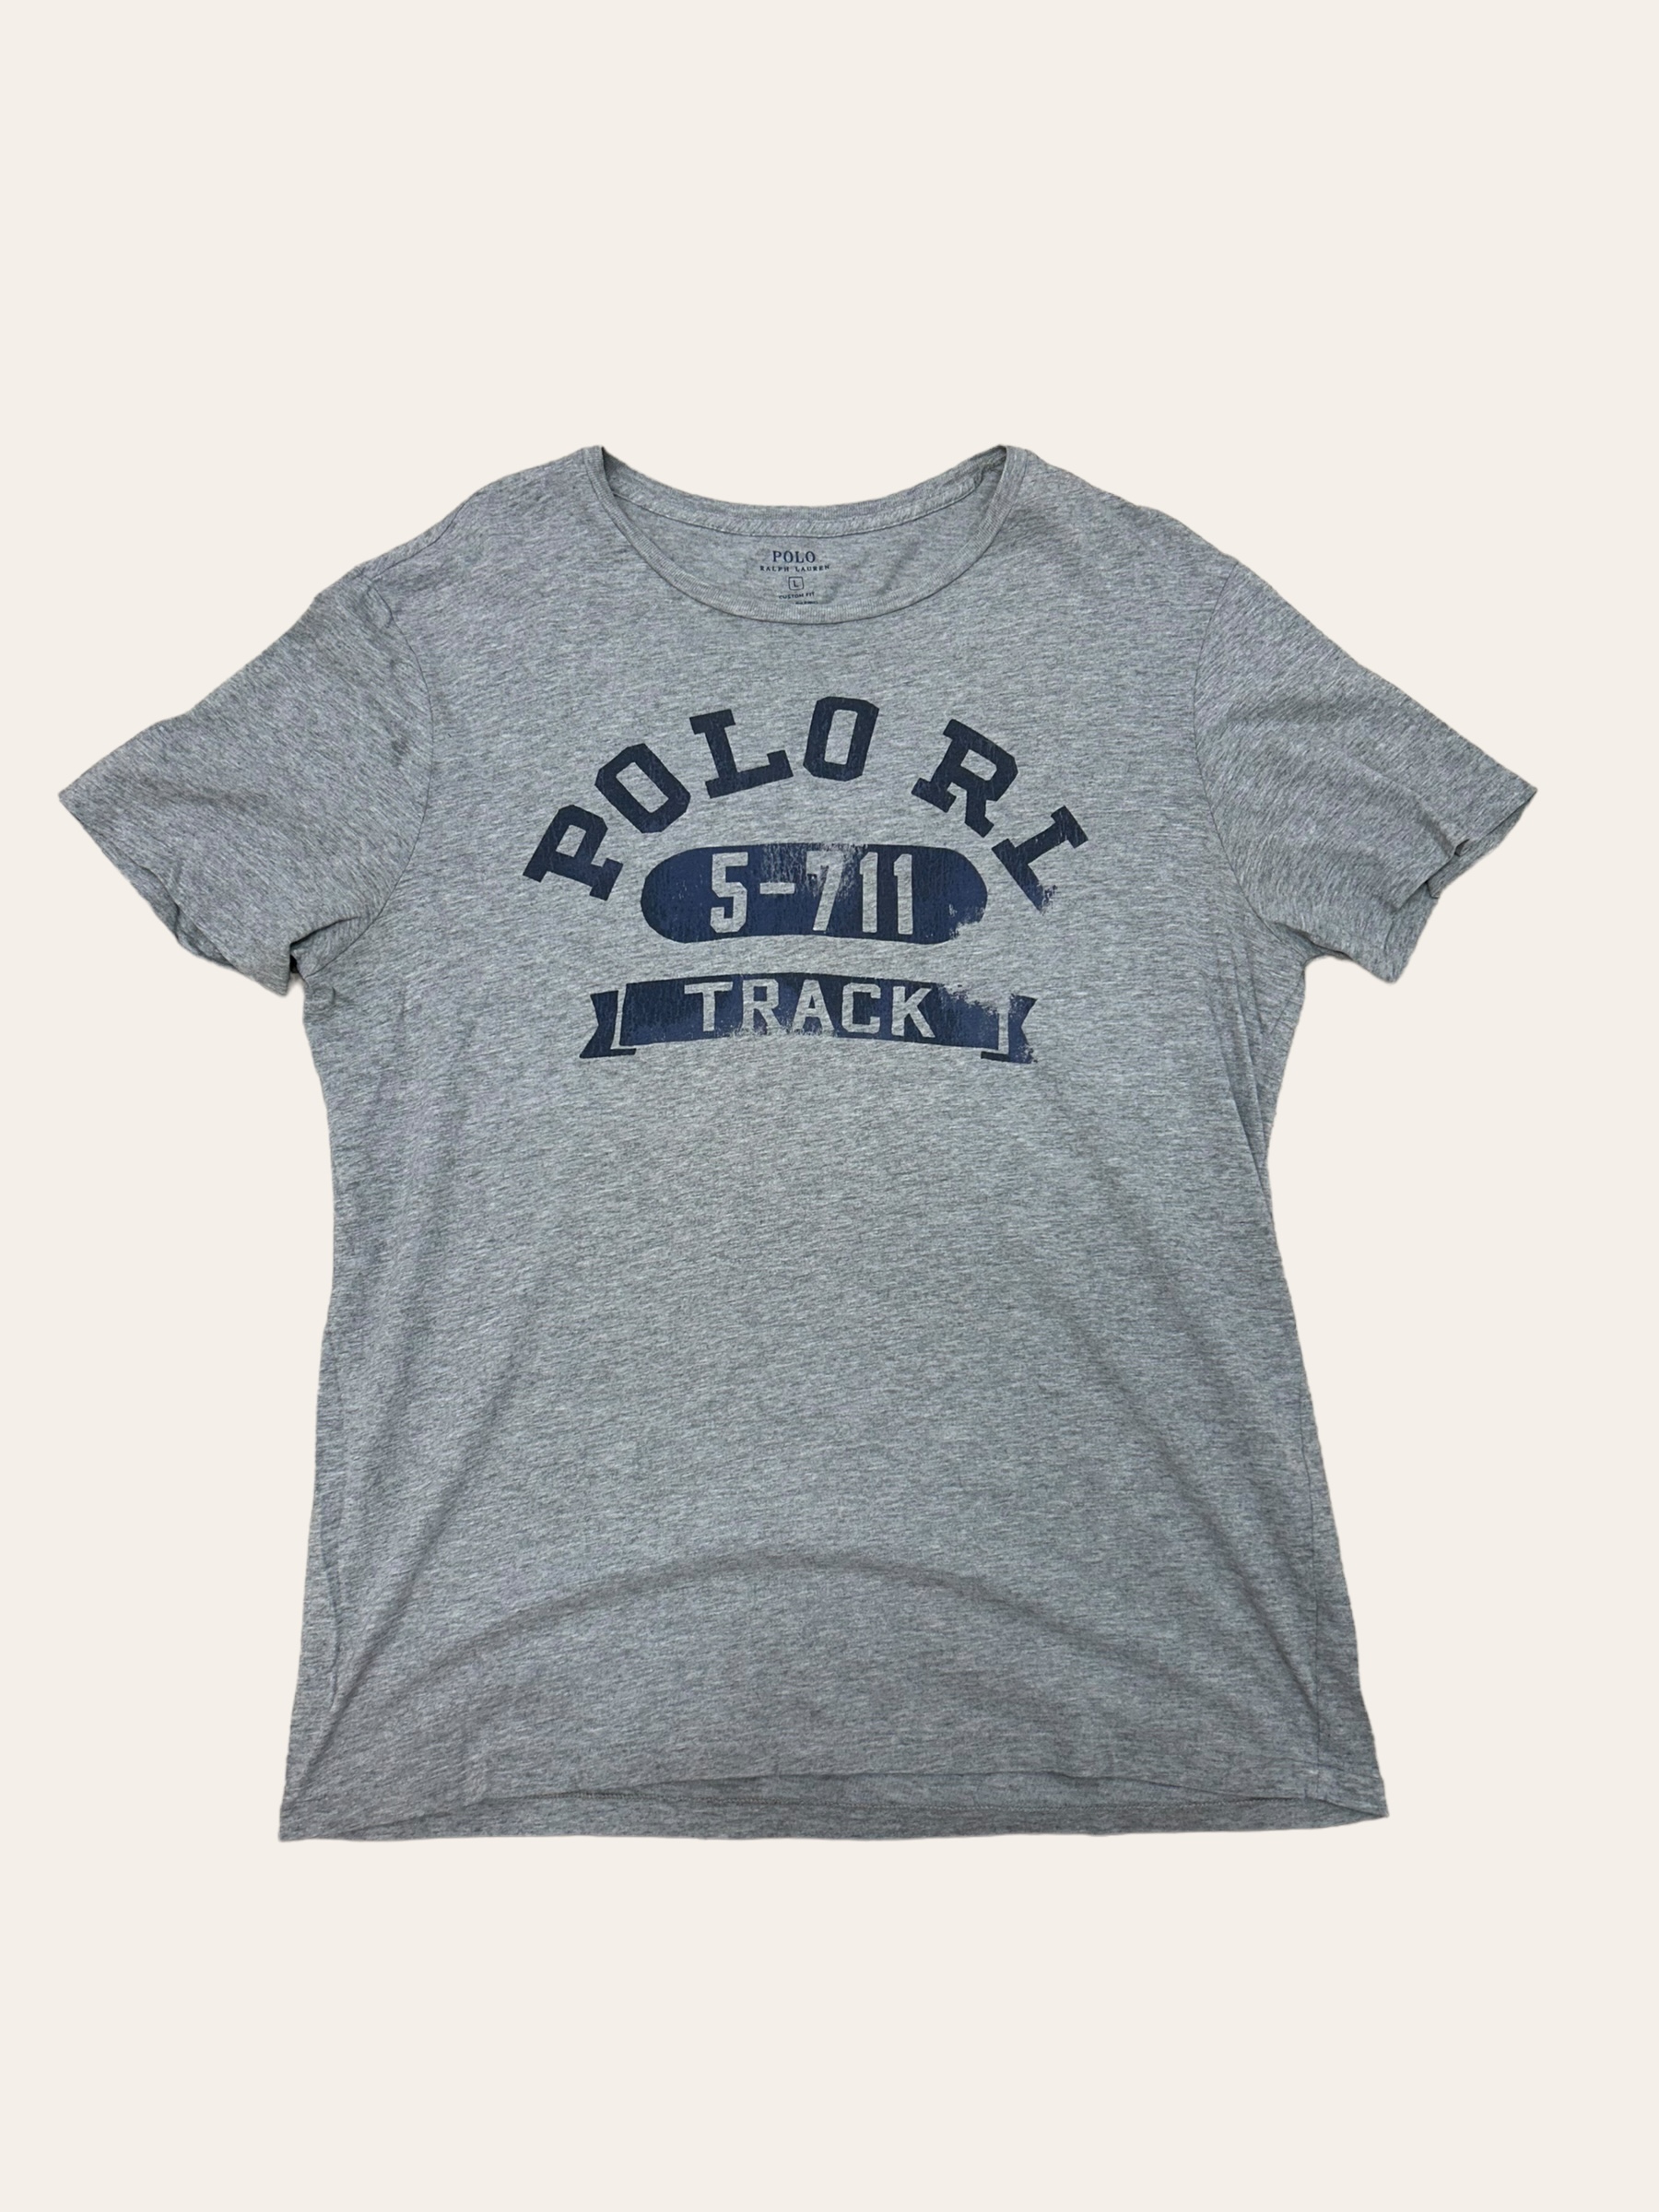 Polo ralph lauren gray printing T-shirt L